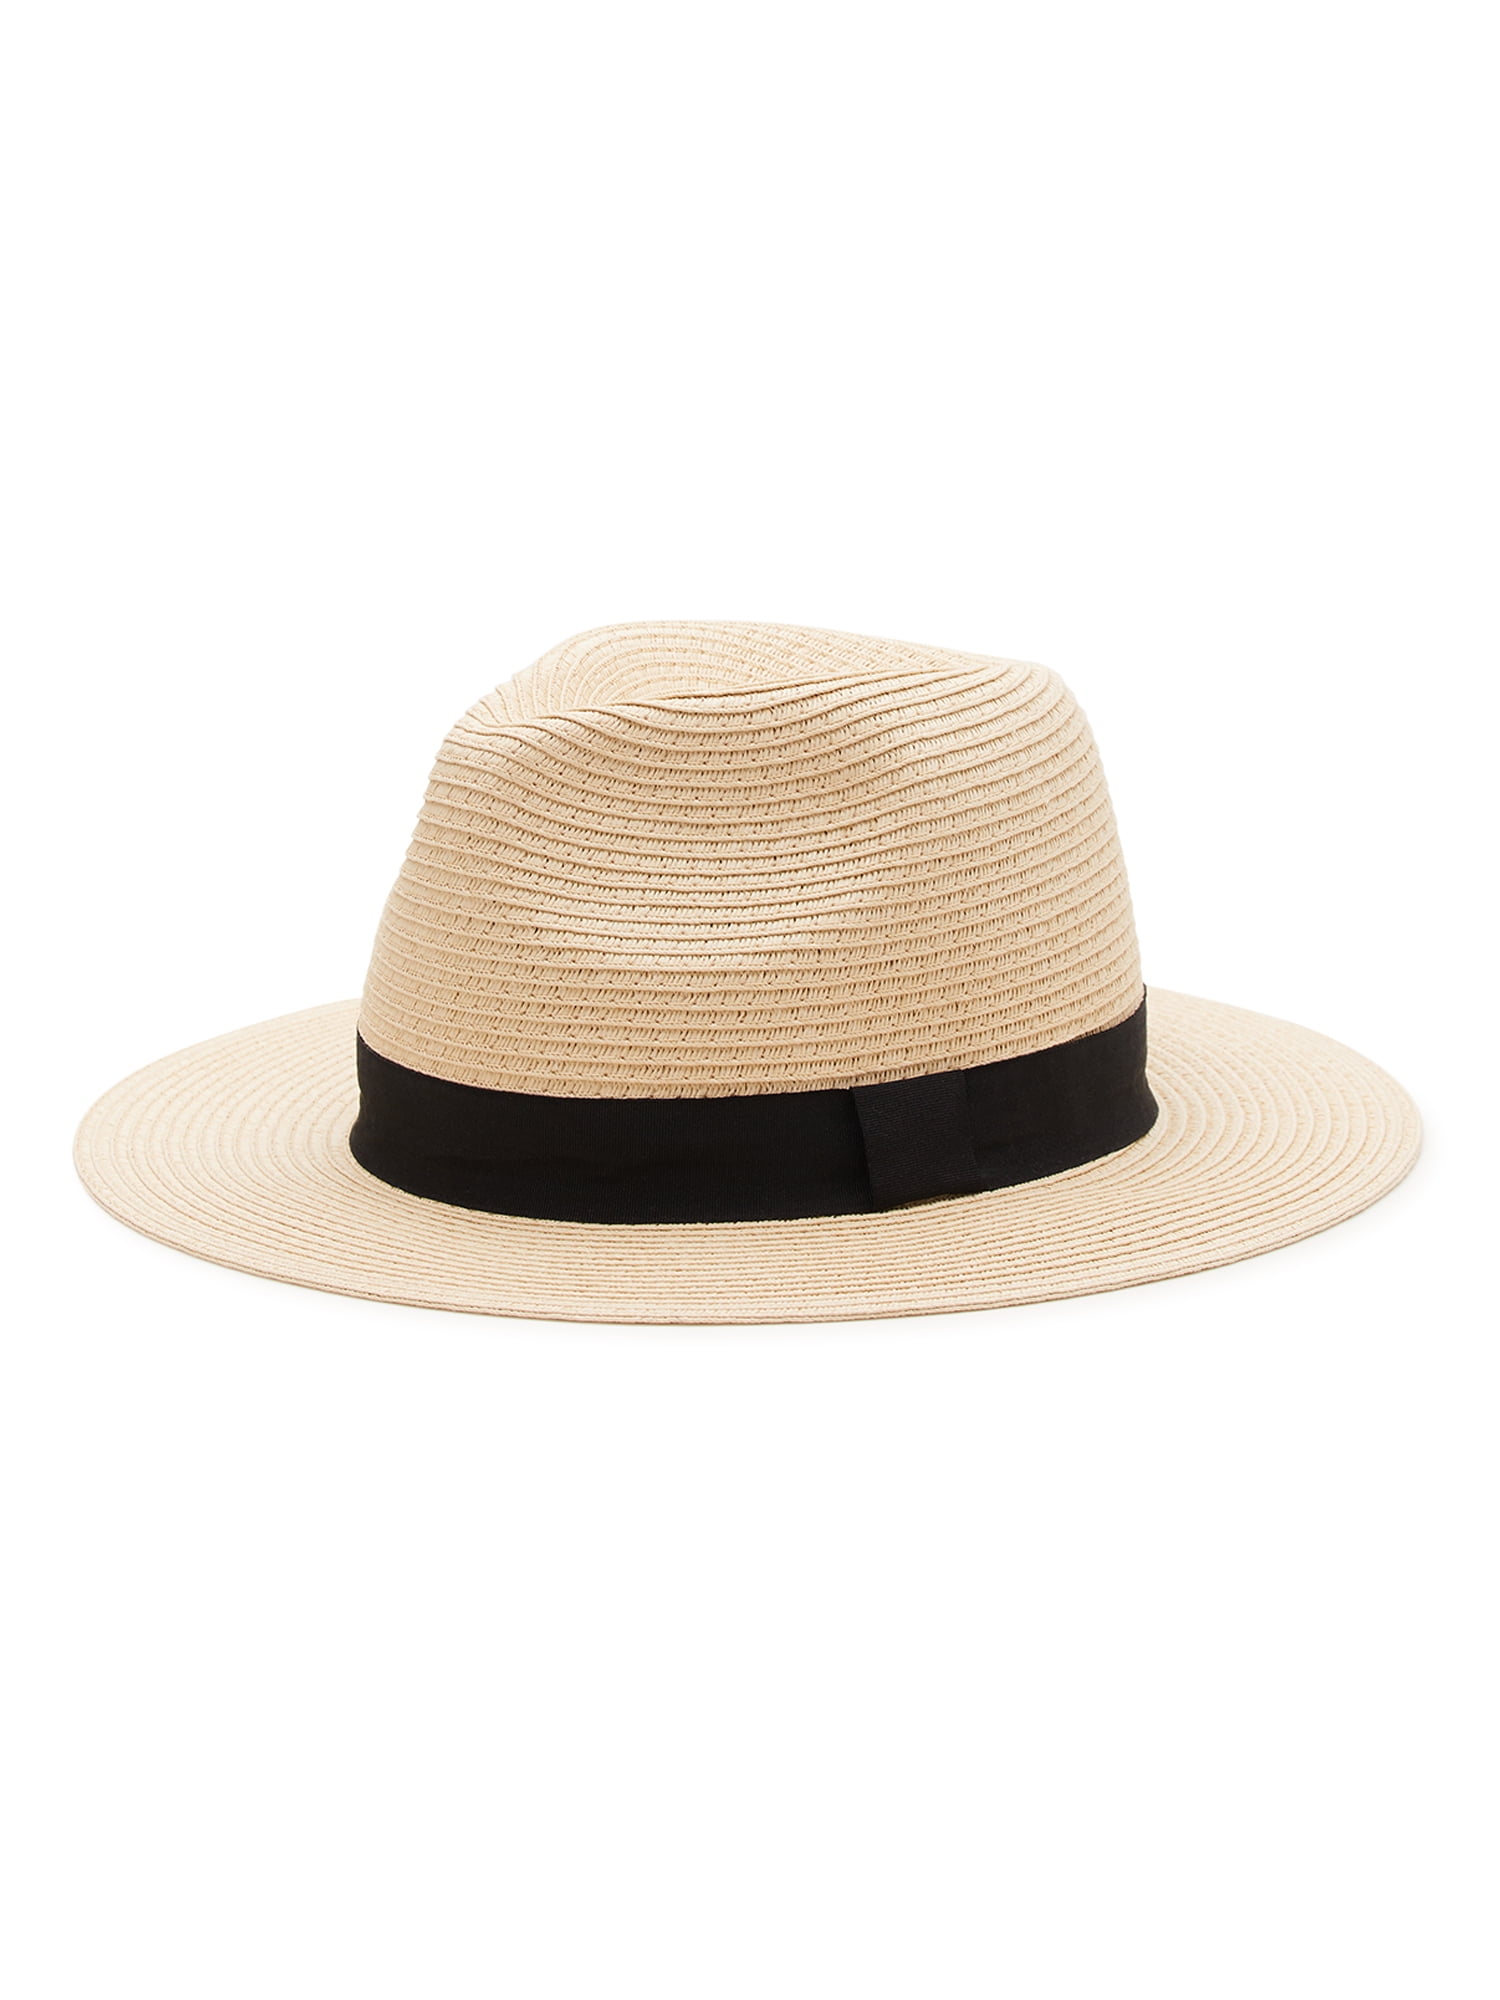 Swiss Tech Mens Panama Hat